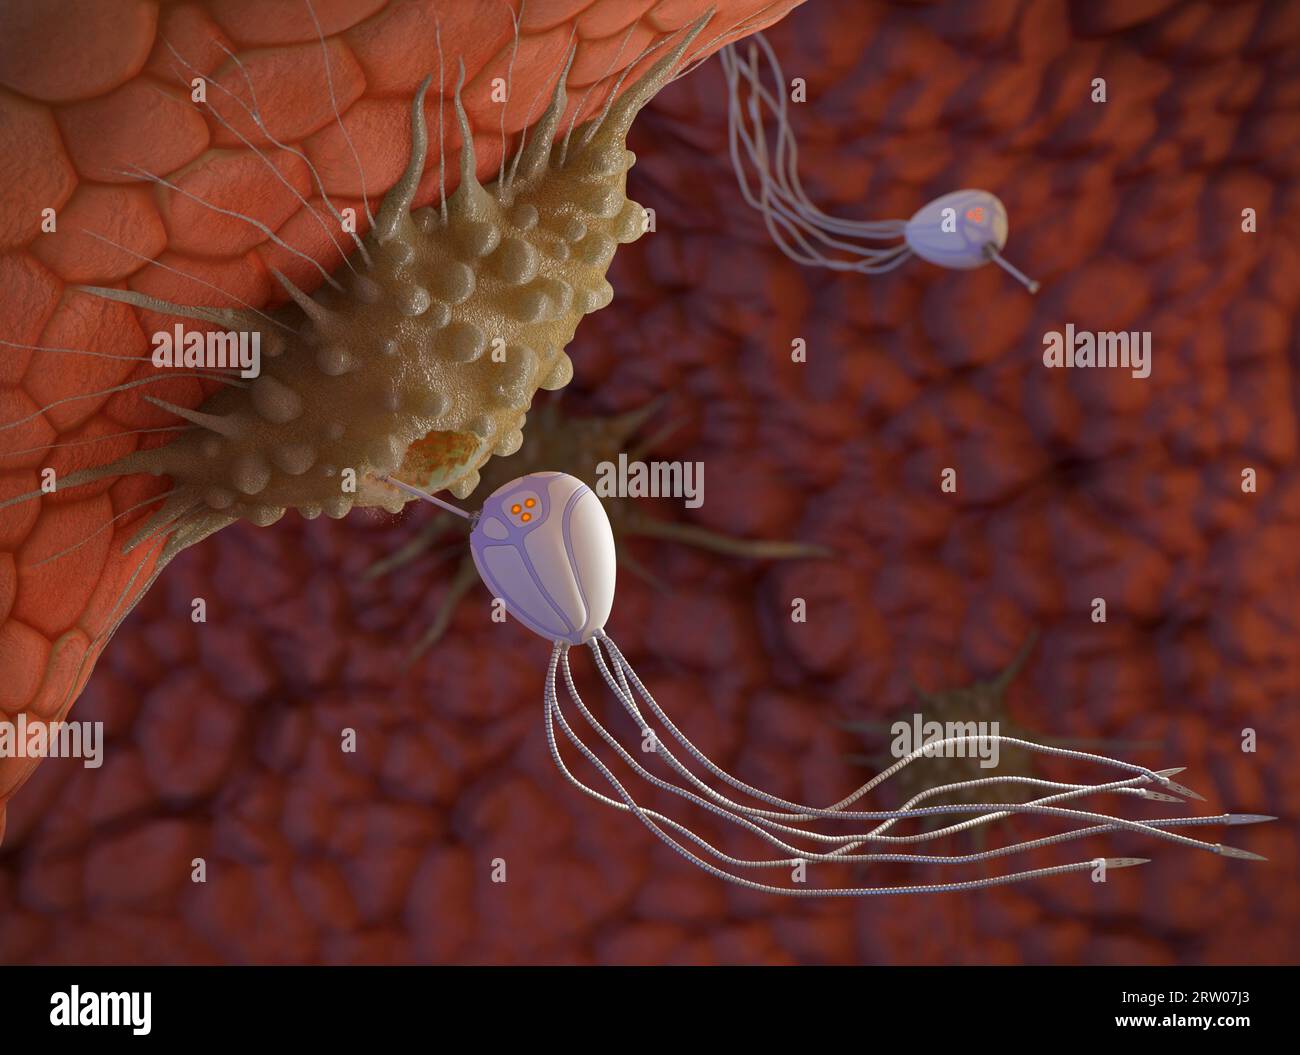 Medical nanobots destroying cancer, illustration Stock Photo